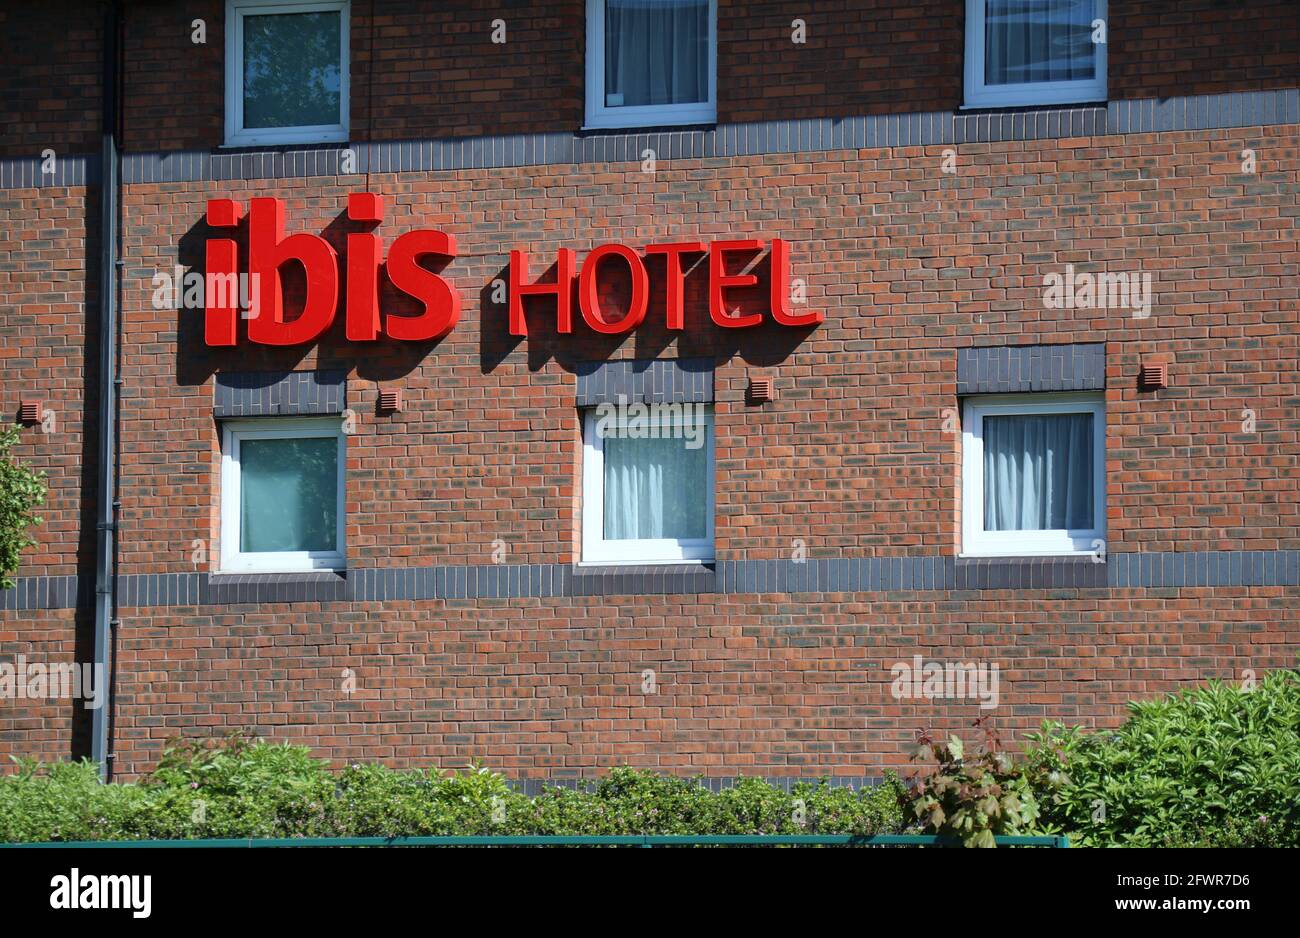 Ibis Hotel in Liverpool Stock Photo